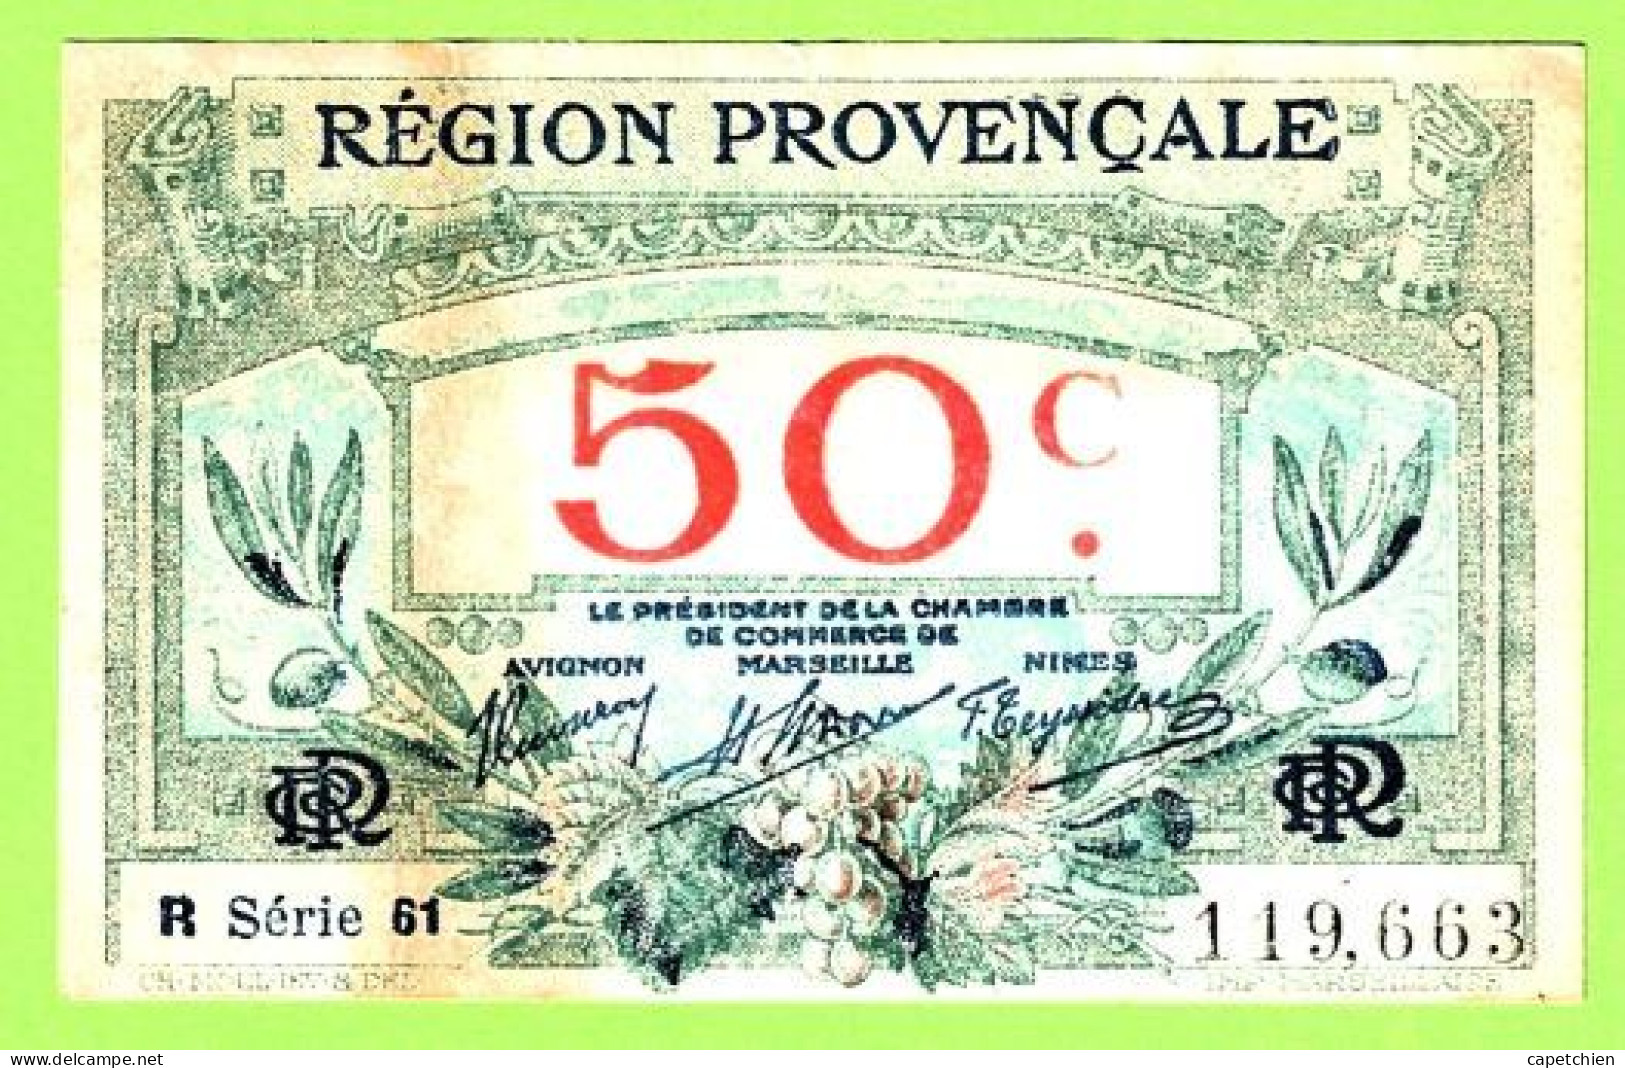 FRANCE / CHAMBRE De COMMERCE / REGION PROVENCALE / 50 CENTIMES / 119663 / R  SERIE 61 - Chamber Of Commerce